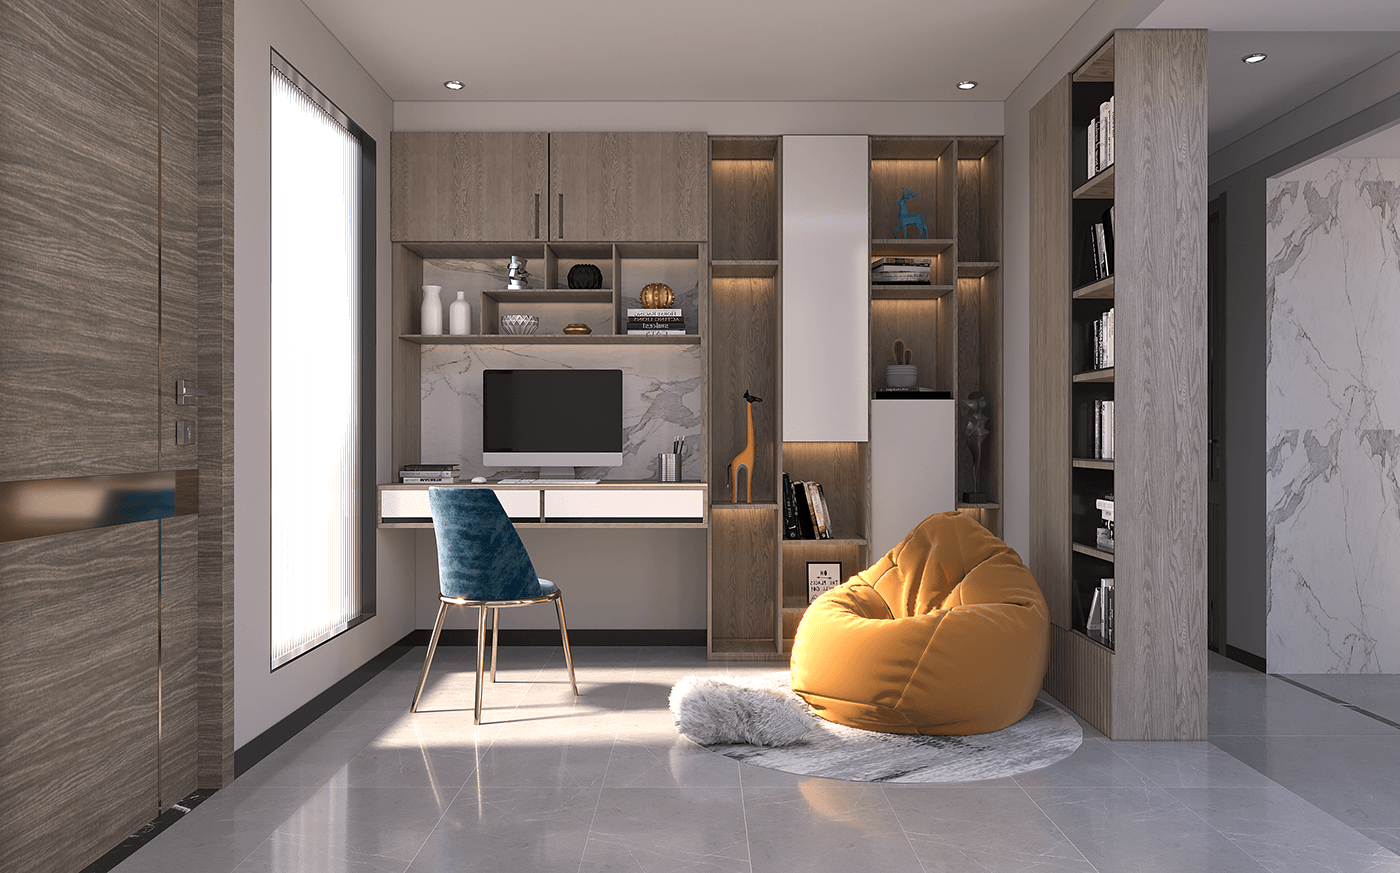 3ds max corona render  visualization architecture Render modern interior design  corona design study room